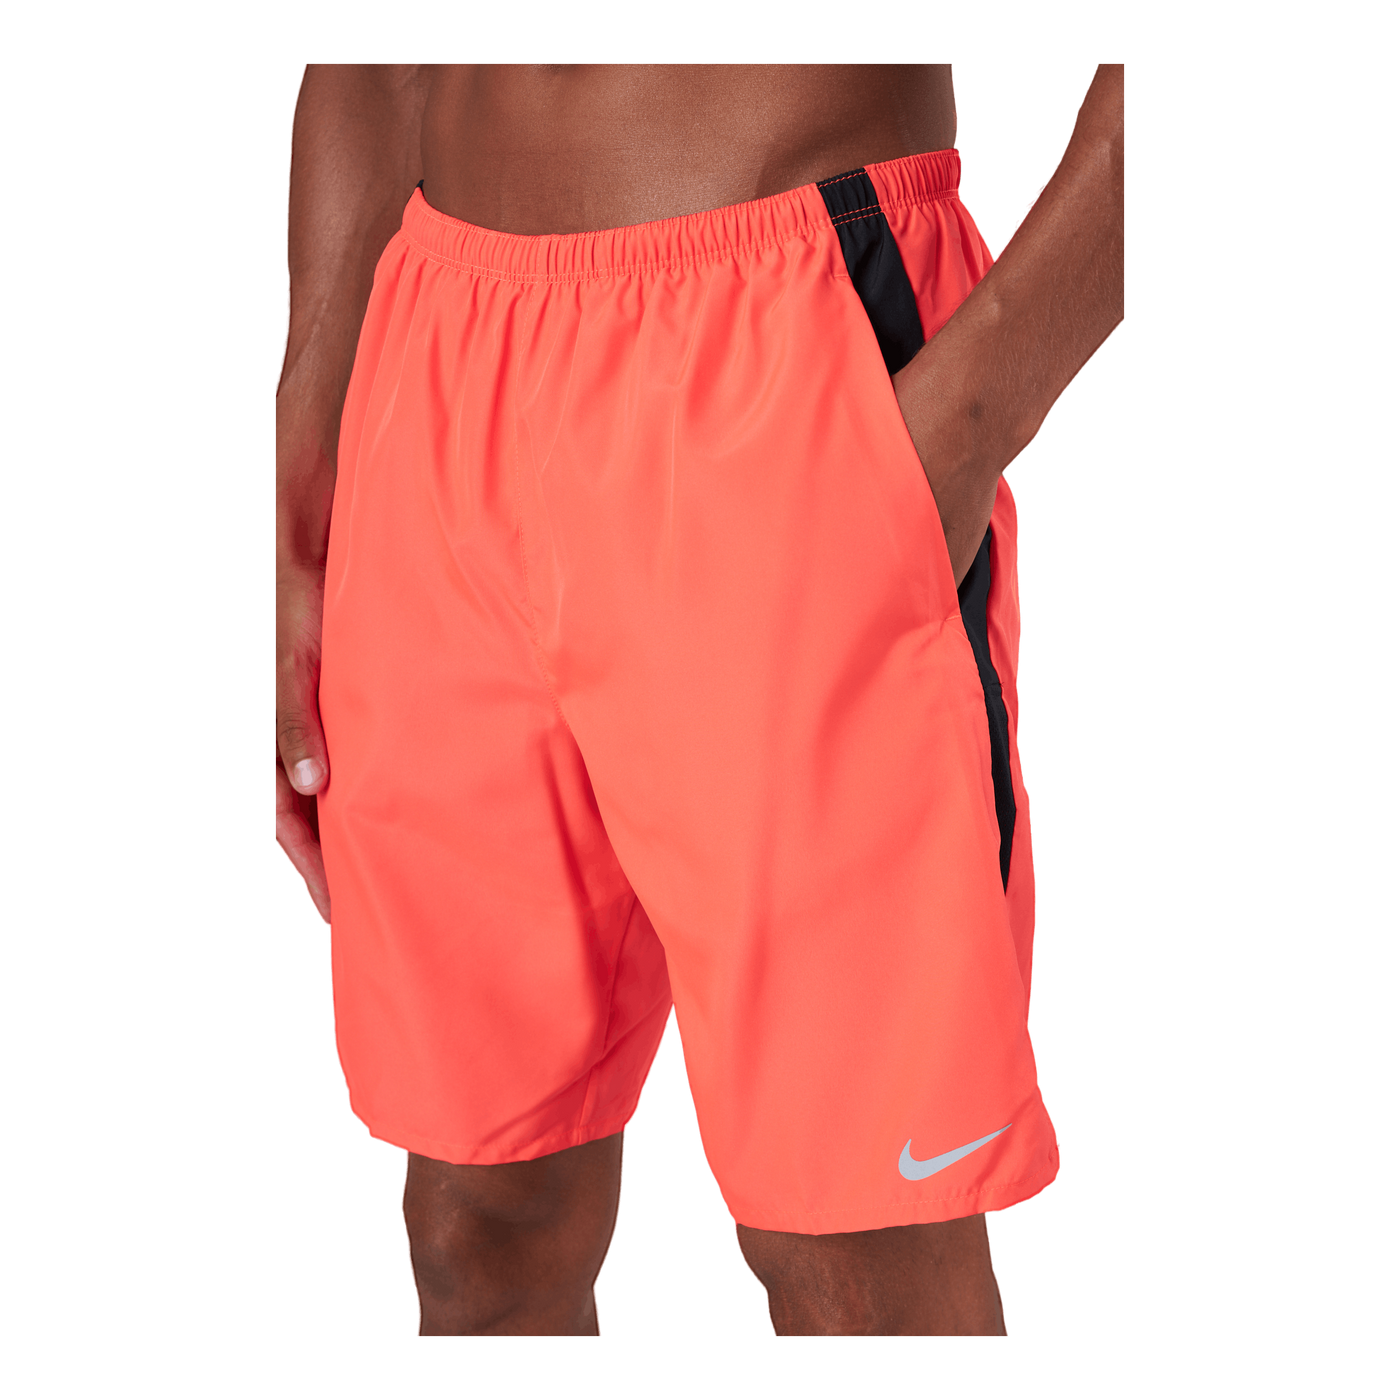 Nike Challenger Men's Brief-li Bright Crimson/black/reflectiv